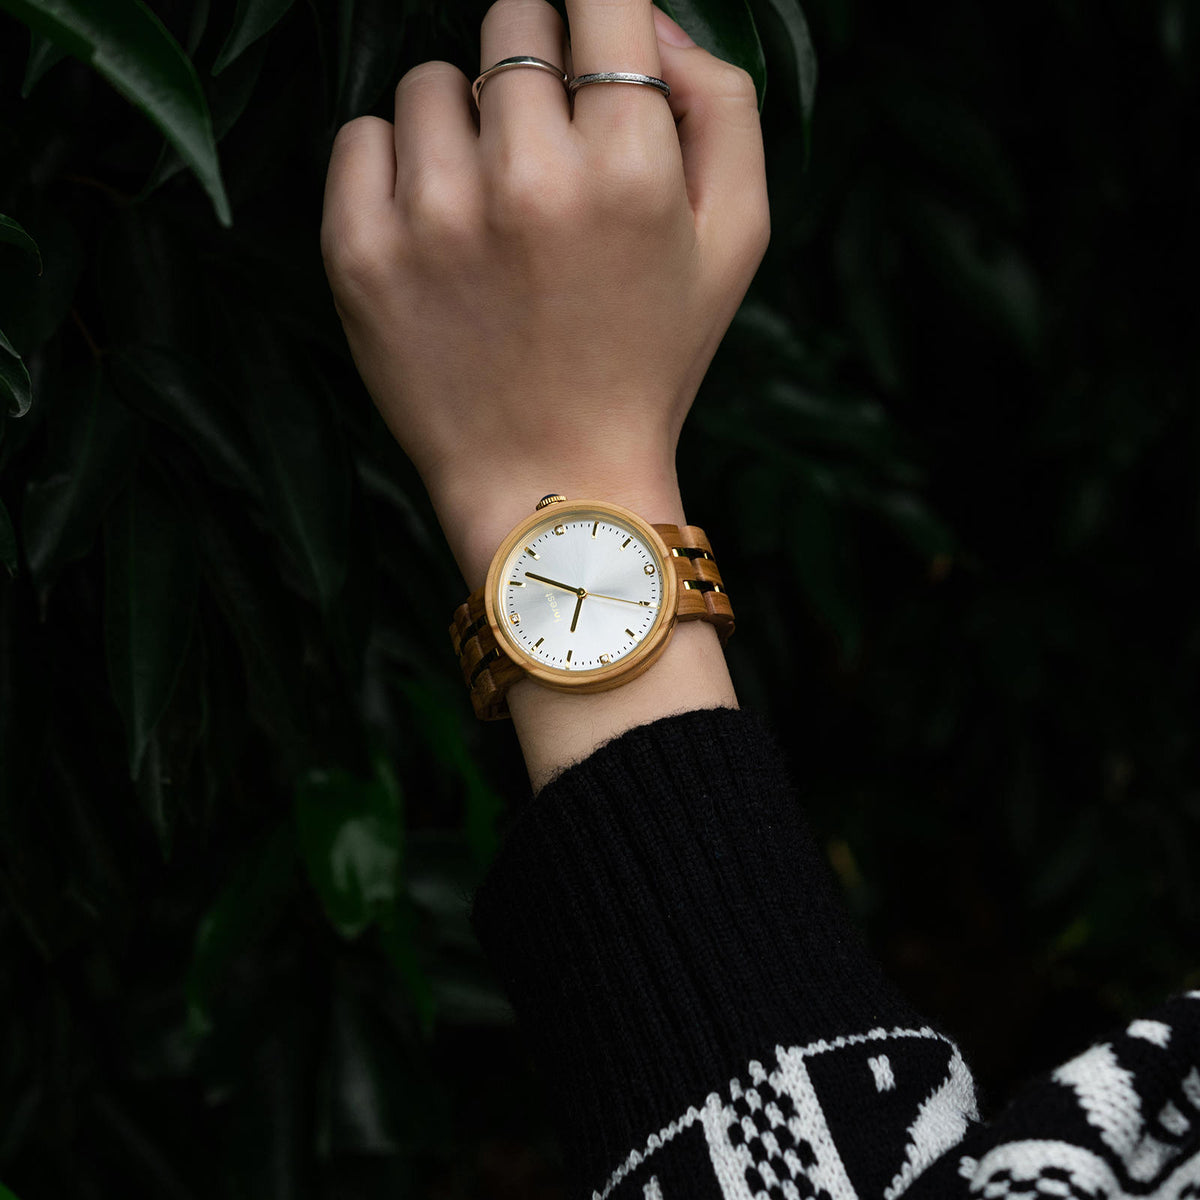 Forest wooden watch on womans wrist as she wears a jumper